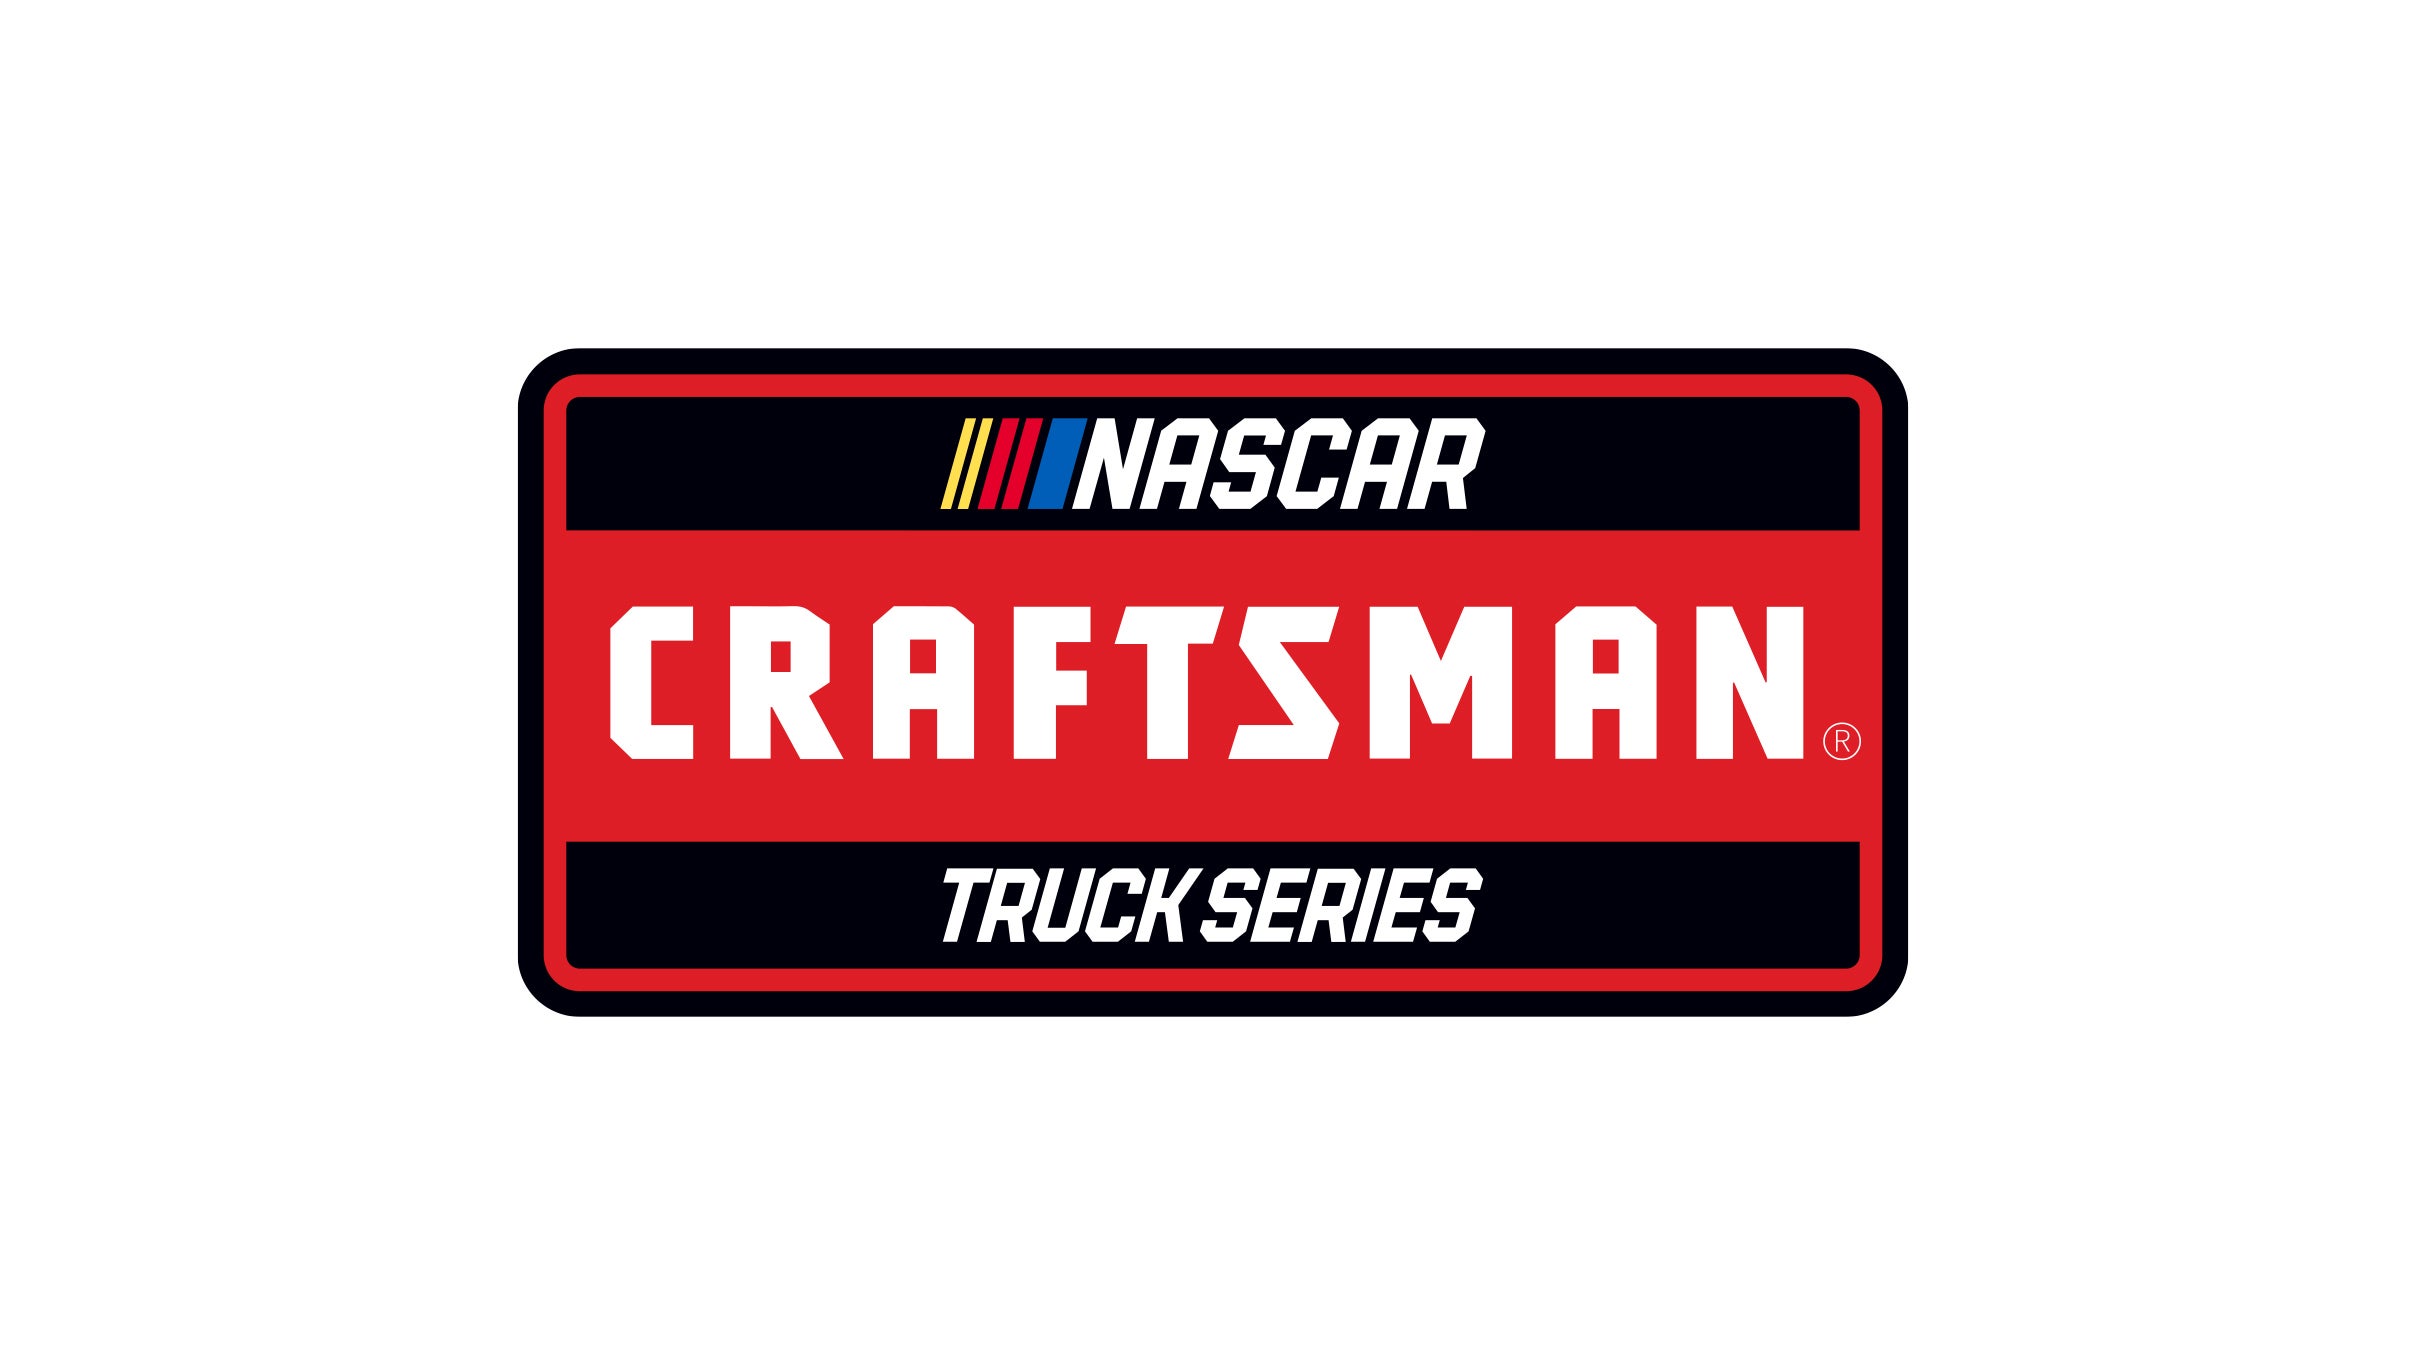 Nascar Craftsman Truck Series at Darlington Raceway